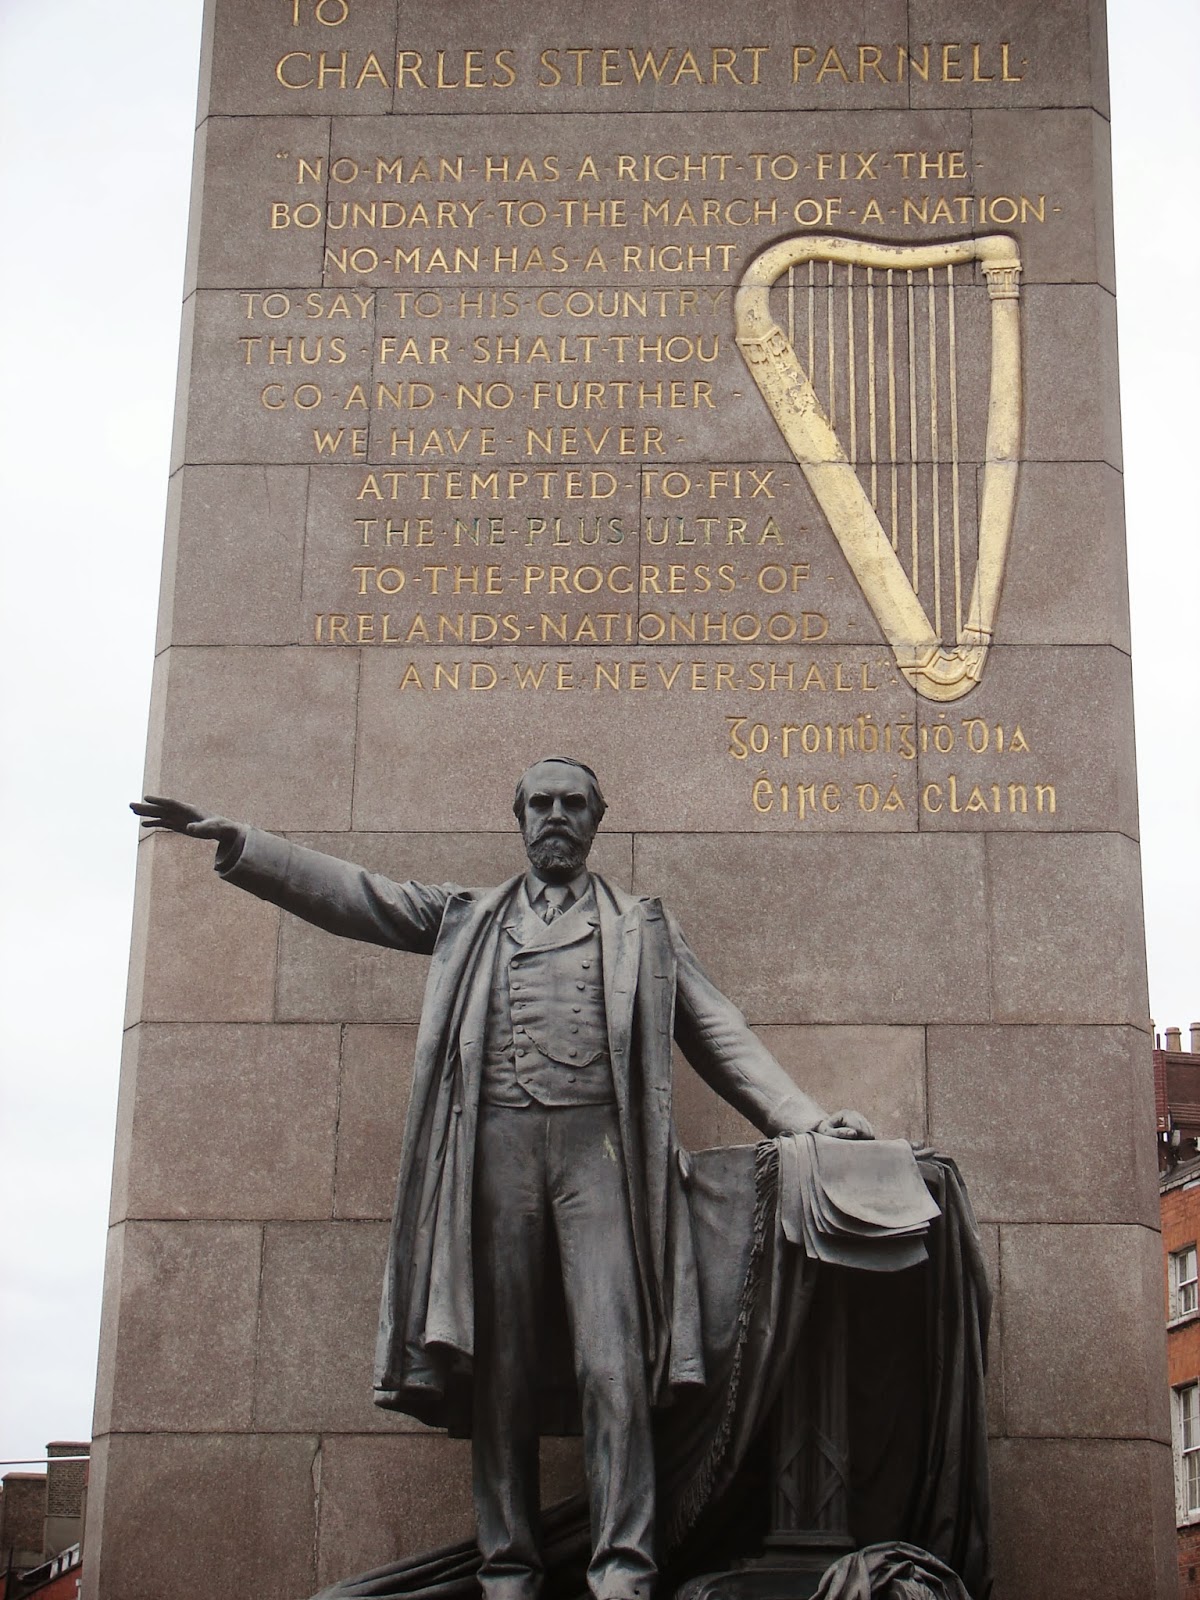 Monumento a Parnell na Ó Connell St. coas frases citadas (XMLS) 